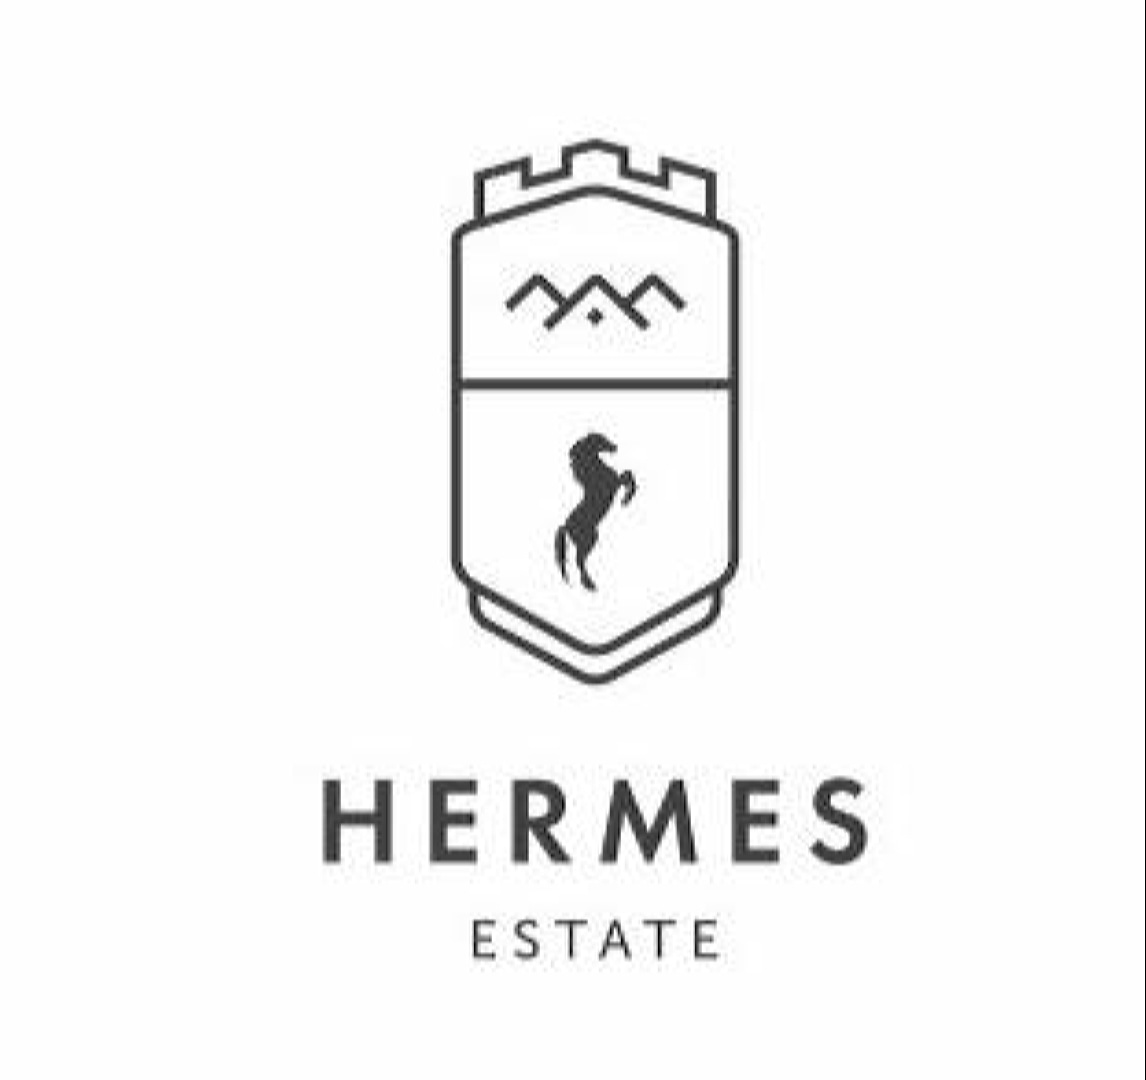 HERMES Estate